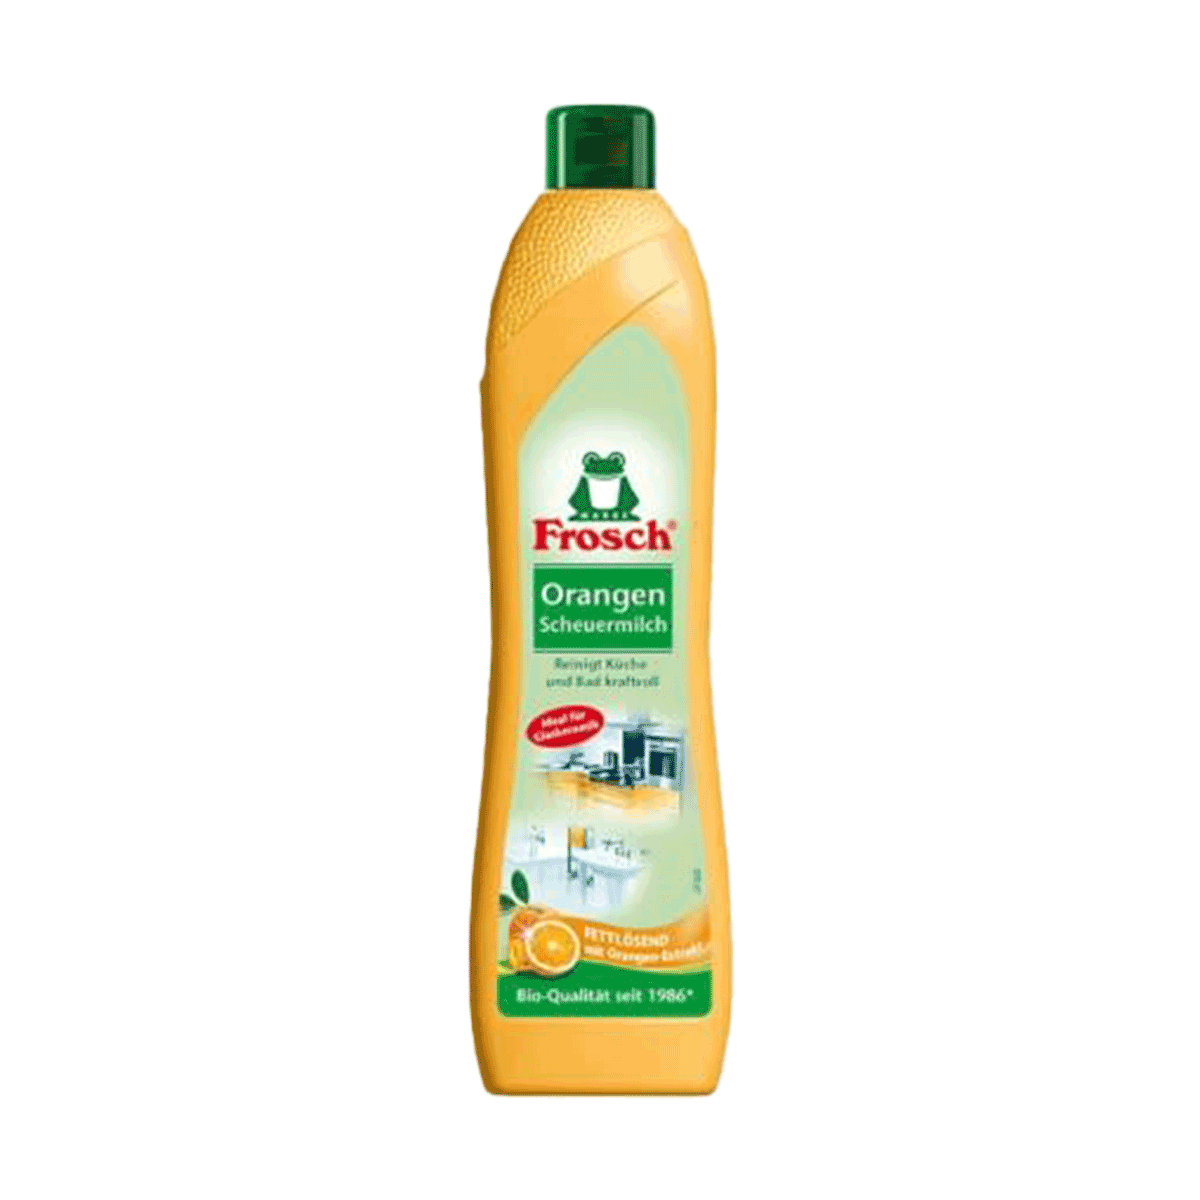 Limpiador crema aroma naranja Frosch 500 ml - Producto Ecológico